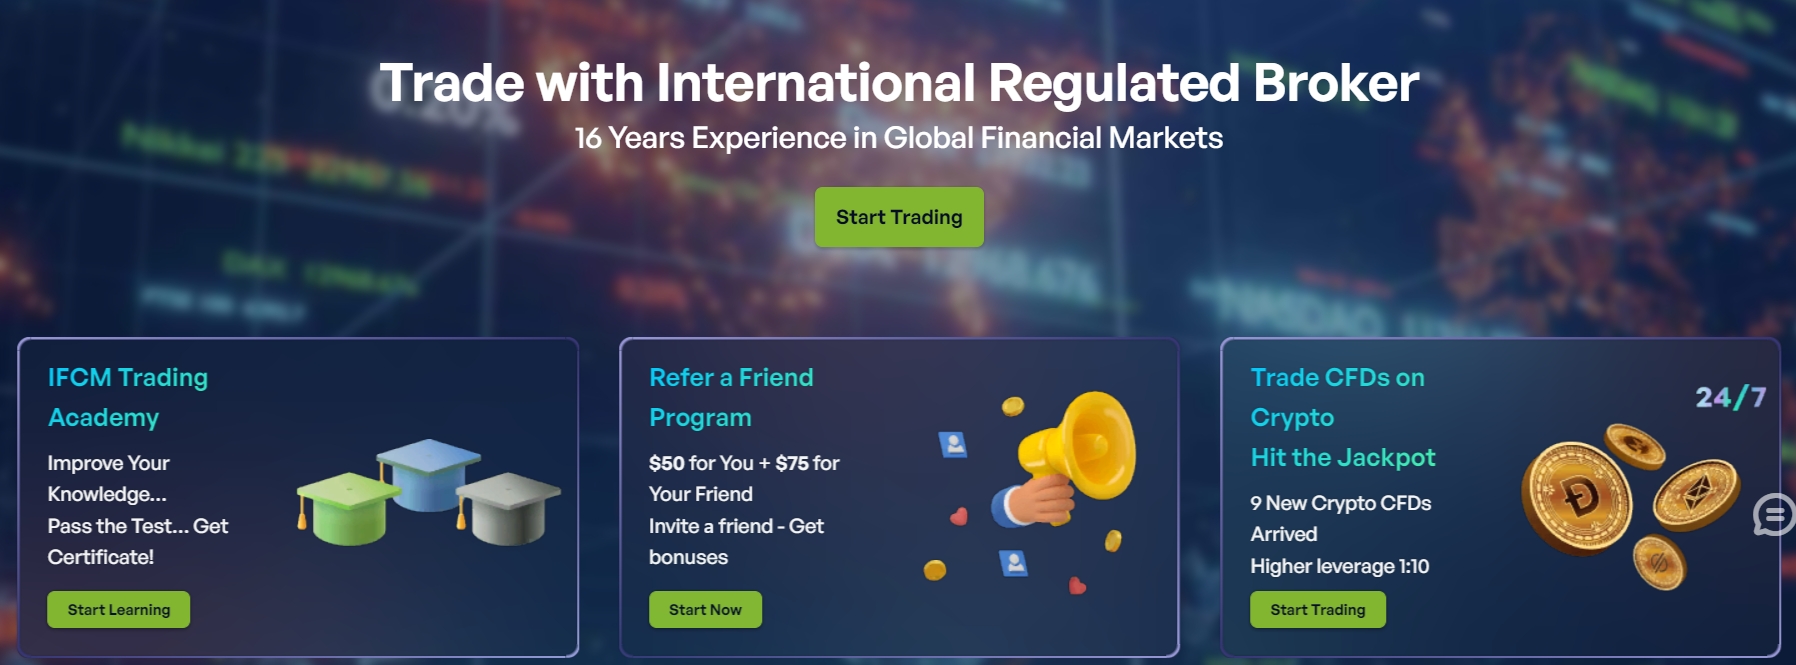 IFC Markets homepage